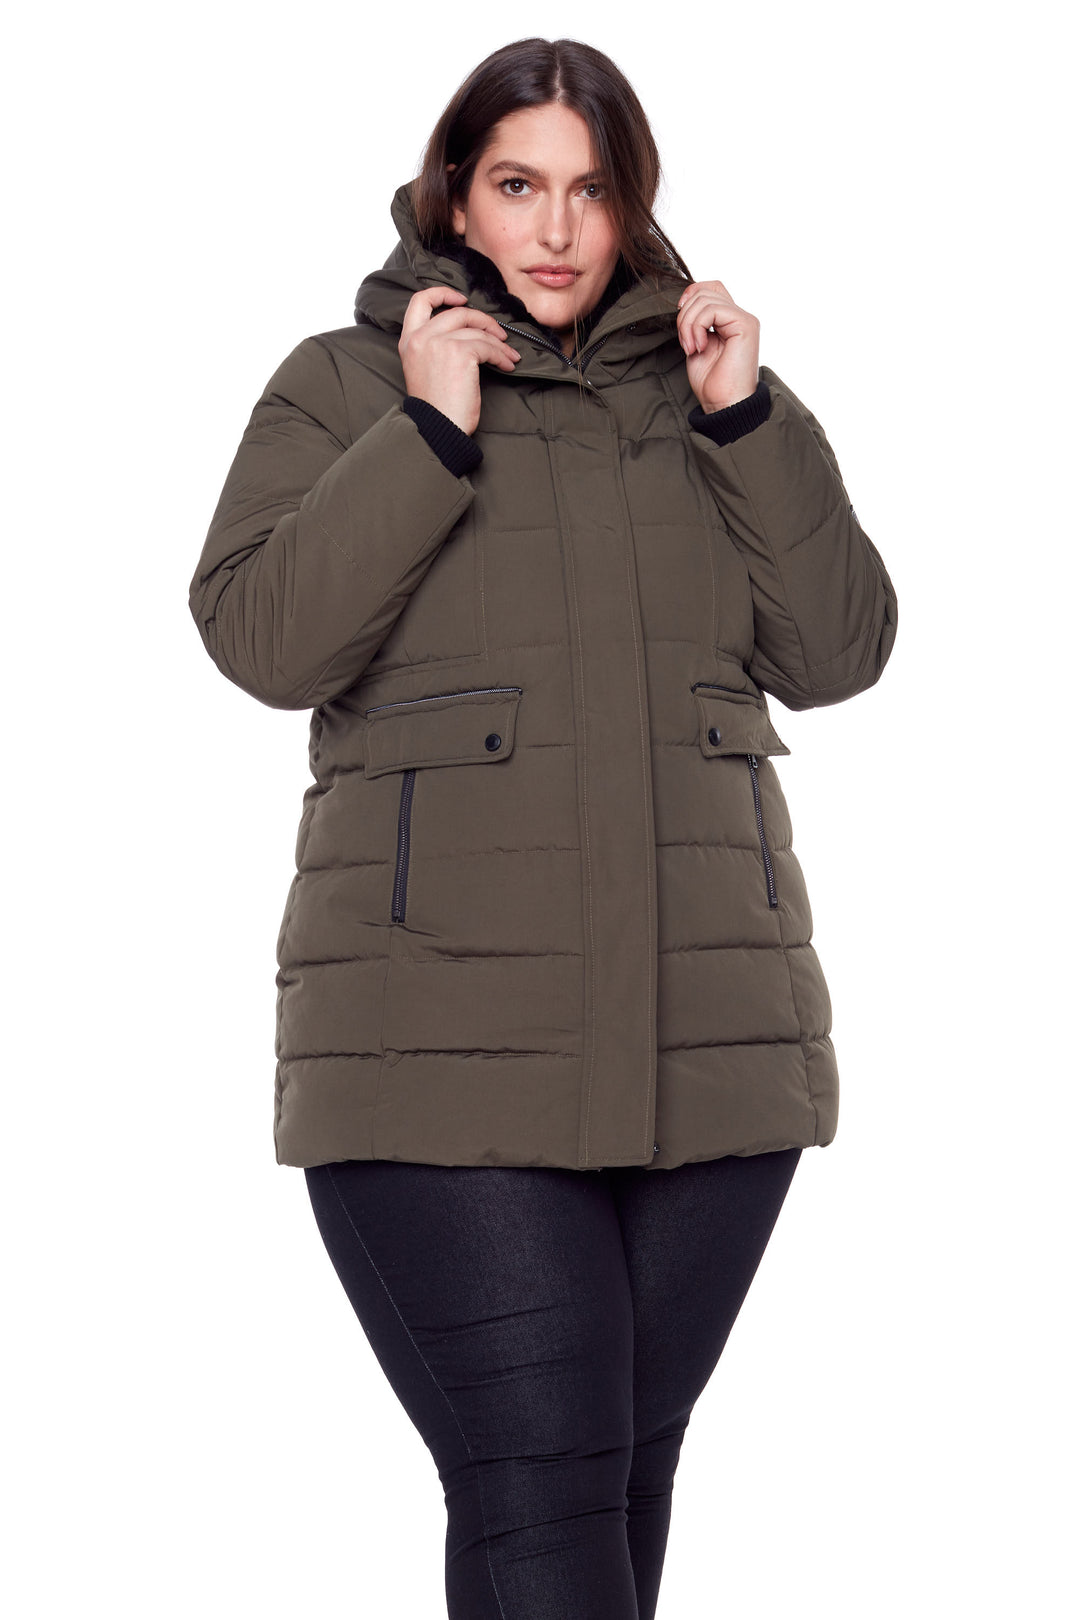 ZXCL Plus Size 6XL Winter Jacket Women Thick Wool Liner Cotton Padded  Jackets Coat Female Faux Fur Collar with Hood Long Parkas Khaki, XL (50 kg  - 55 kg) : : Home & Kitchen